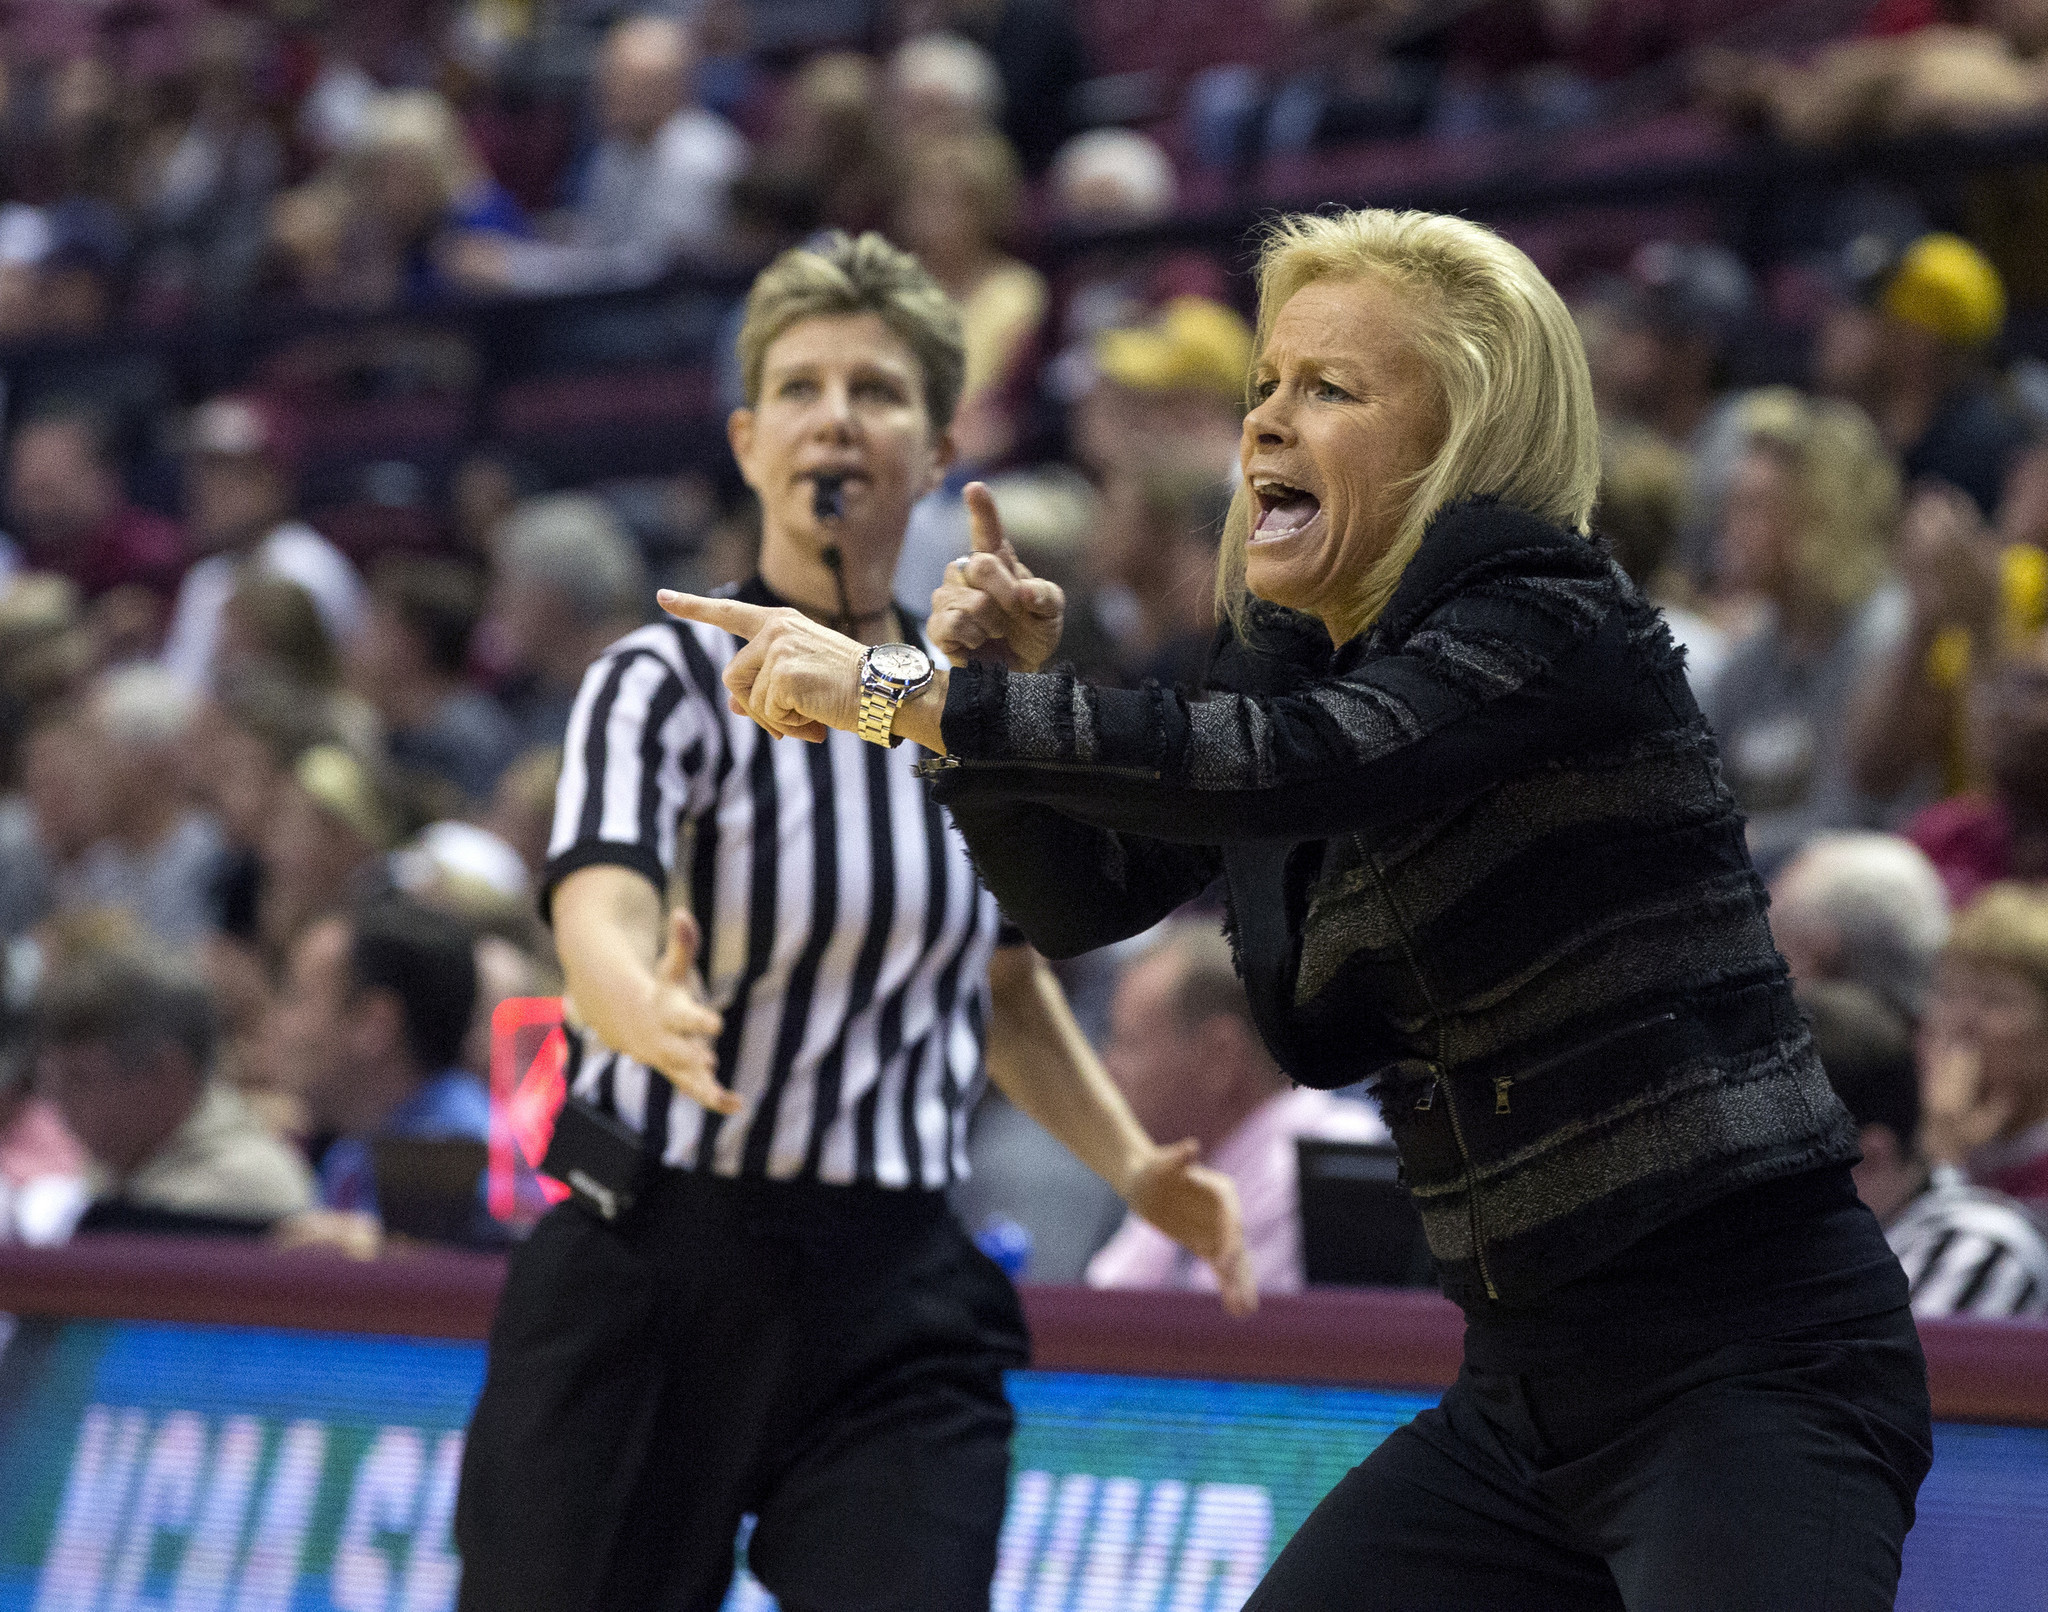 FSU women's hoops pushes for first Final Four bid  Orlando Sentinel